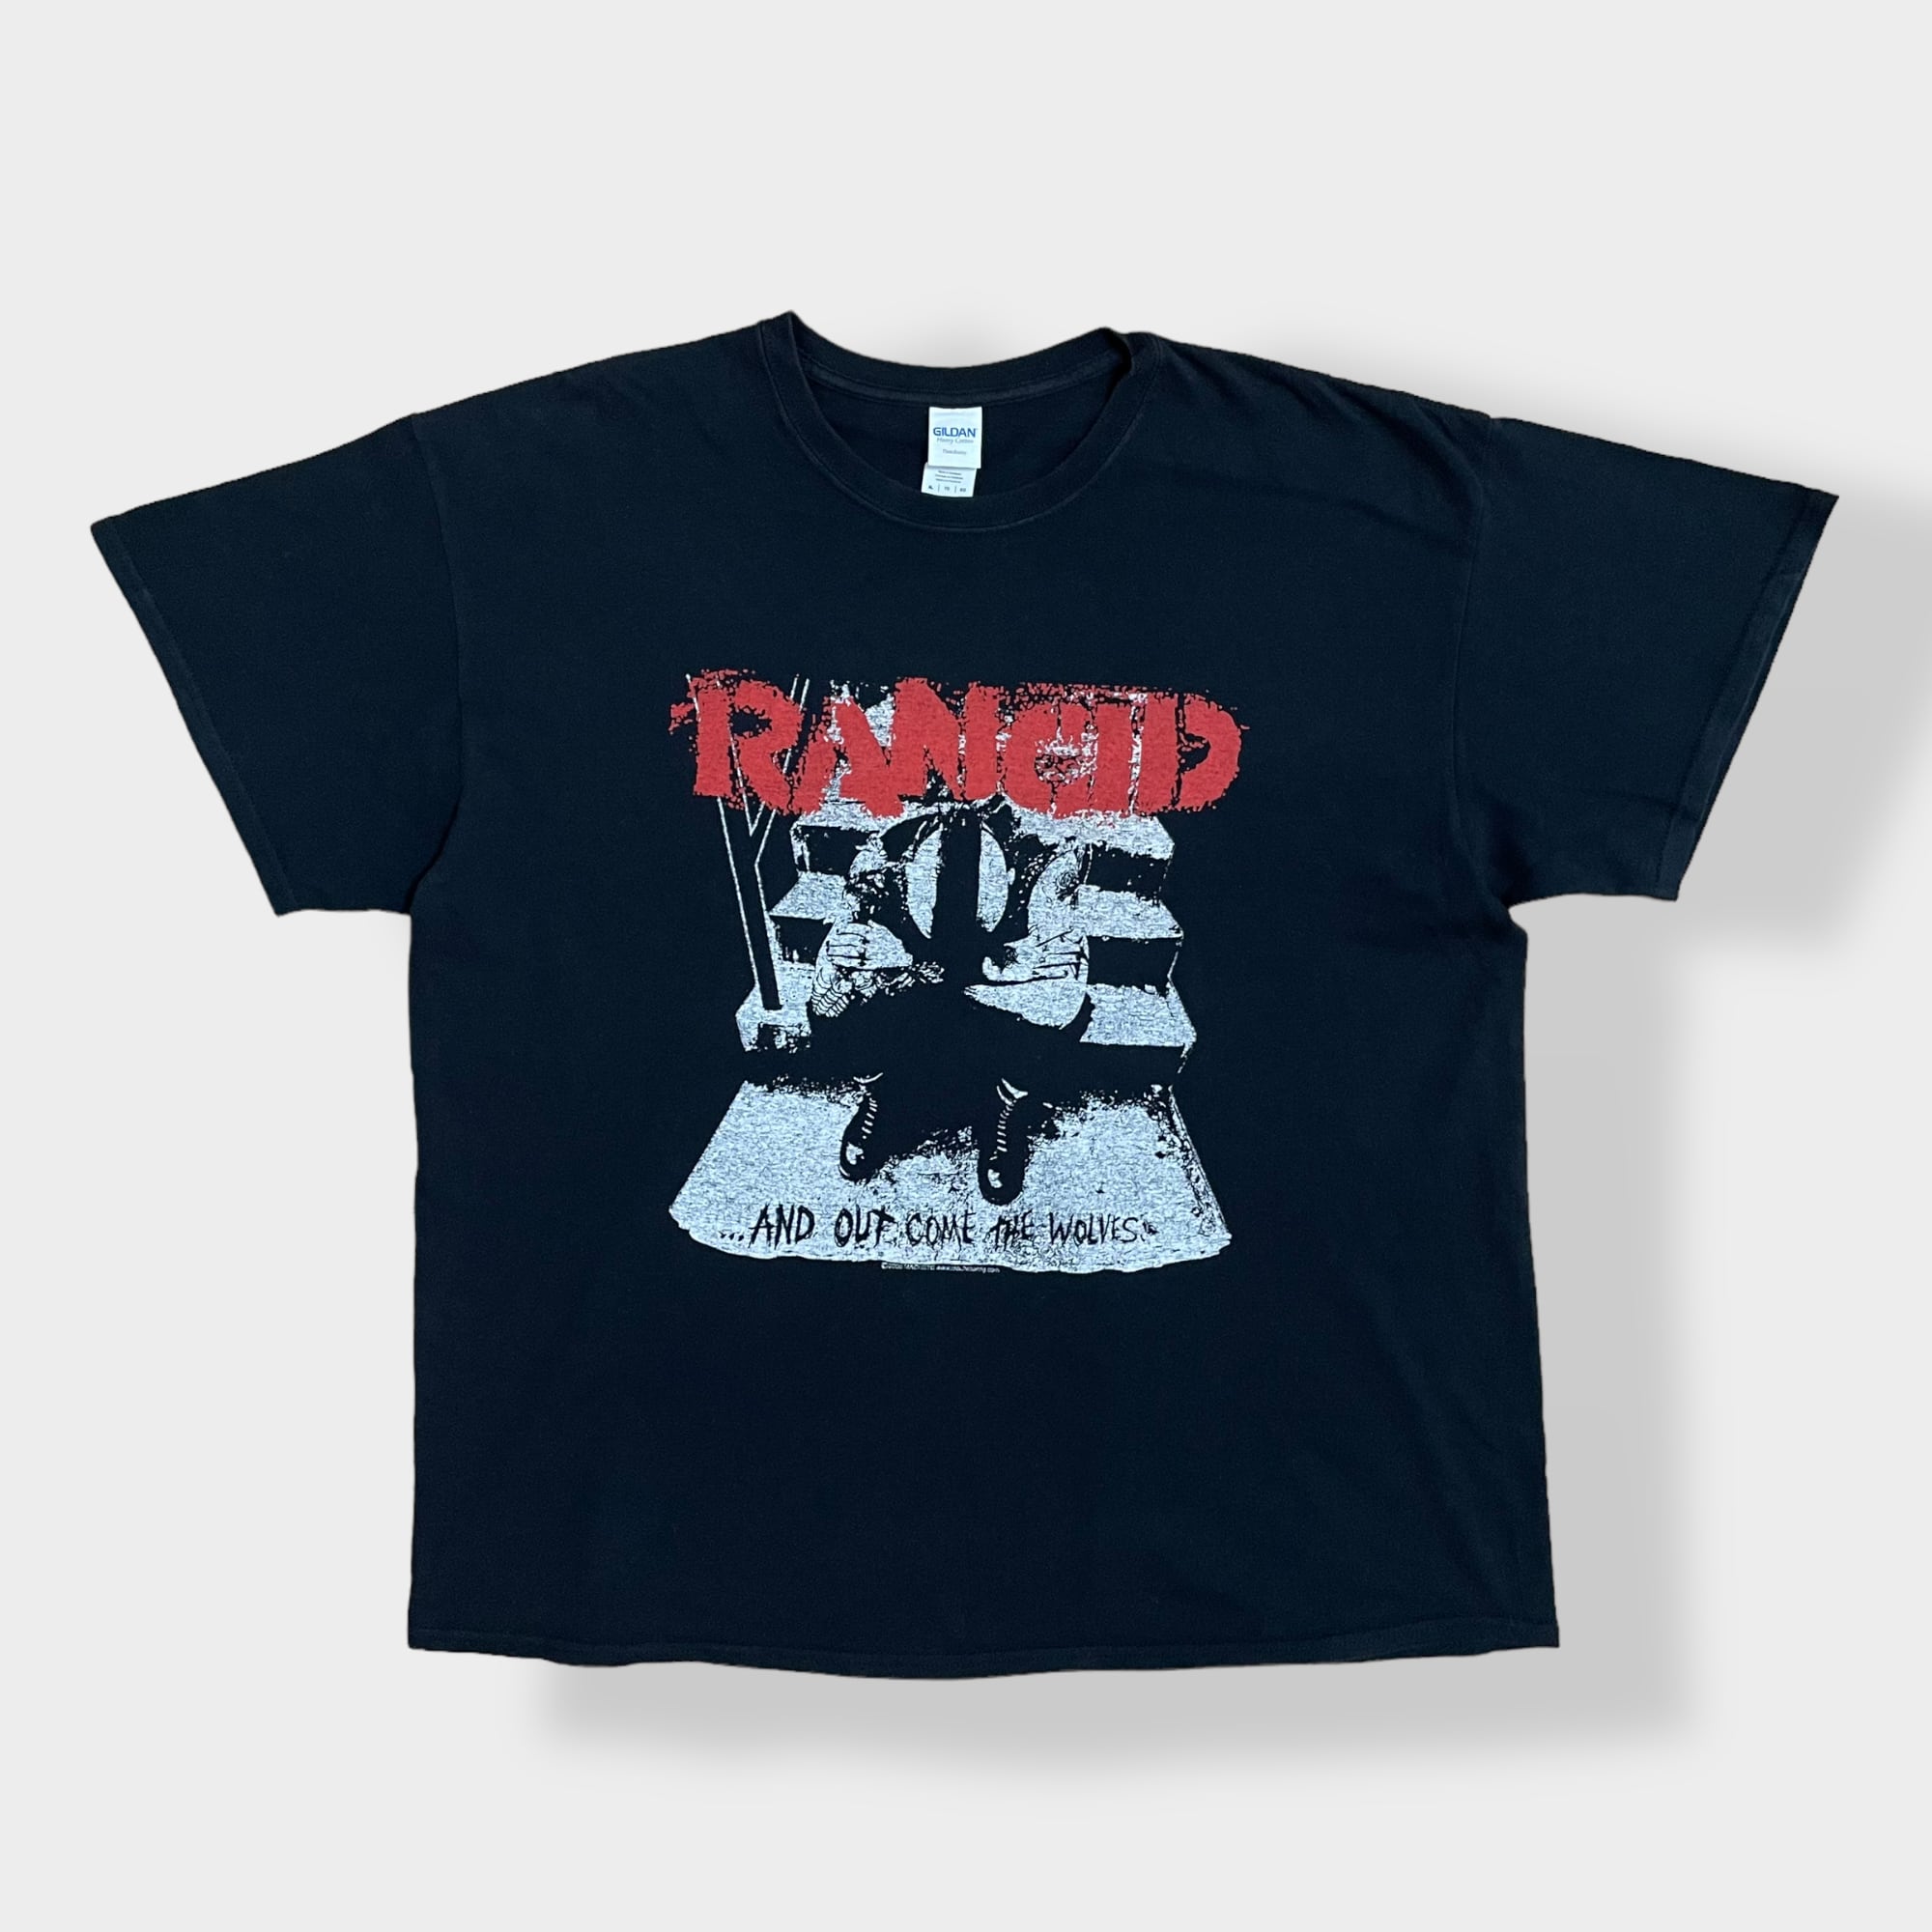 GILDAN】RANCID オフィシャル 公式 Tシャツ バンドTシャツ …And Out